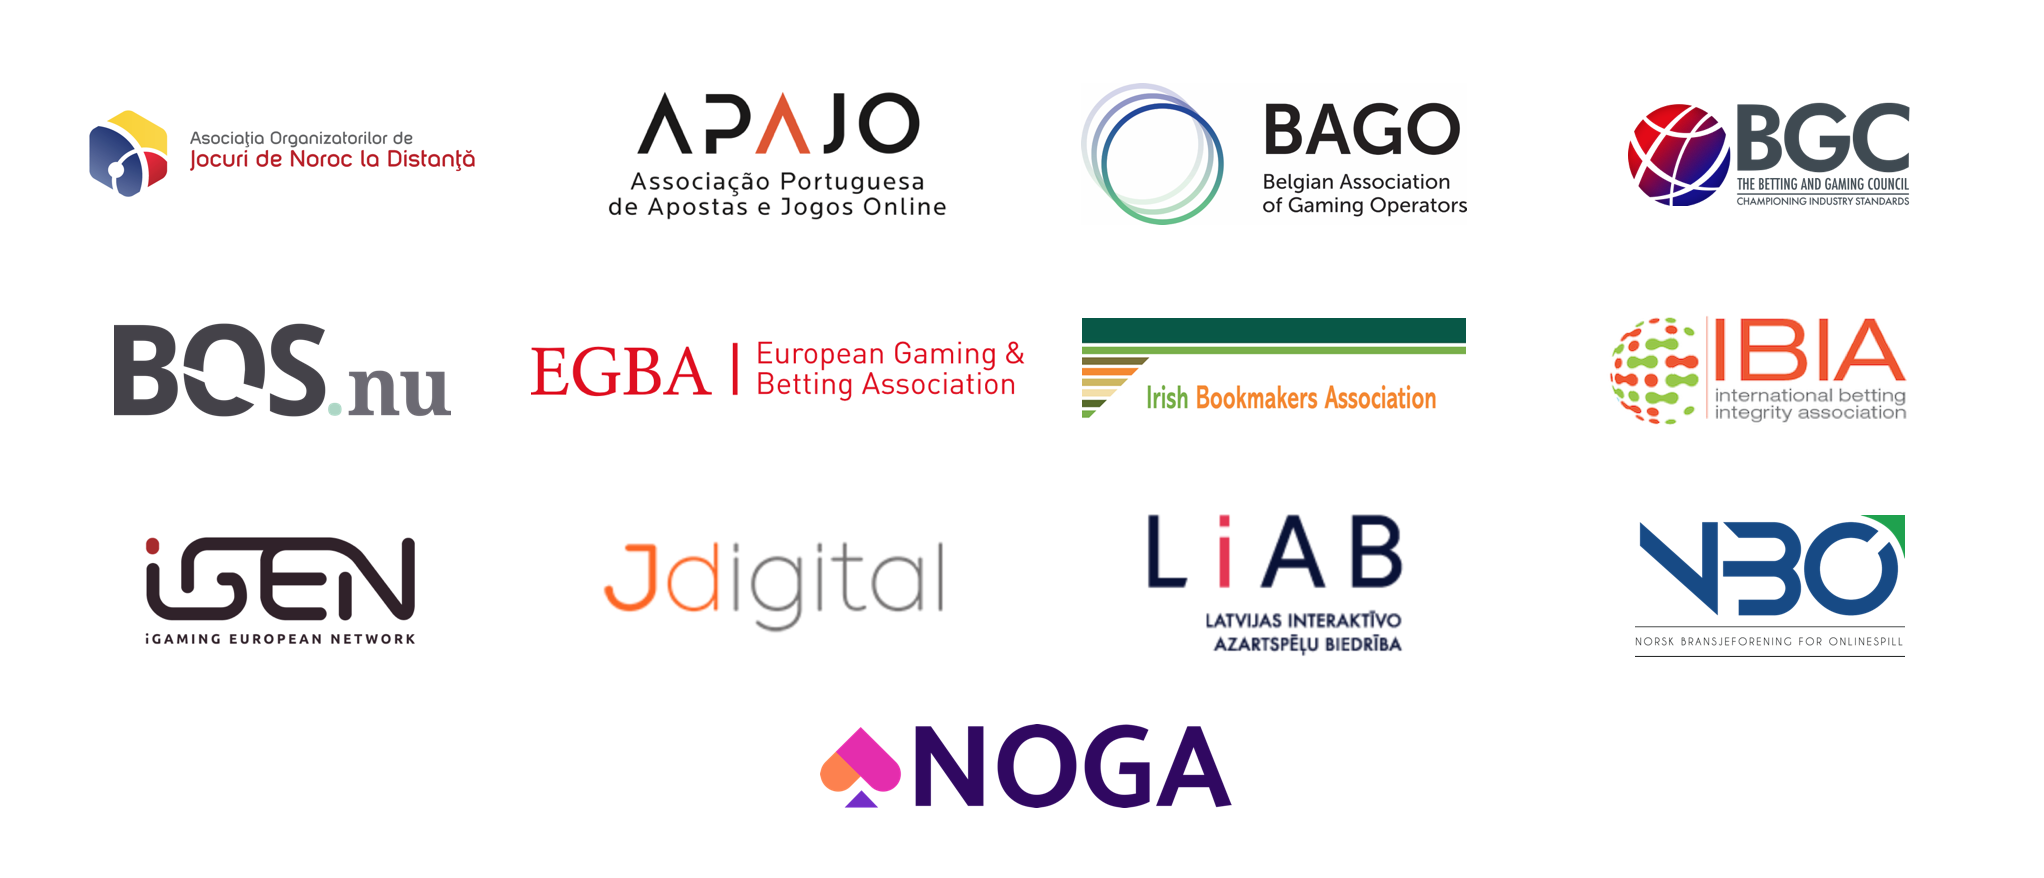 Members of EGBA Organize European Safer Gambling Week